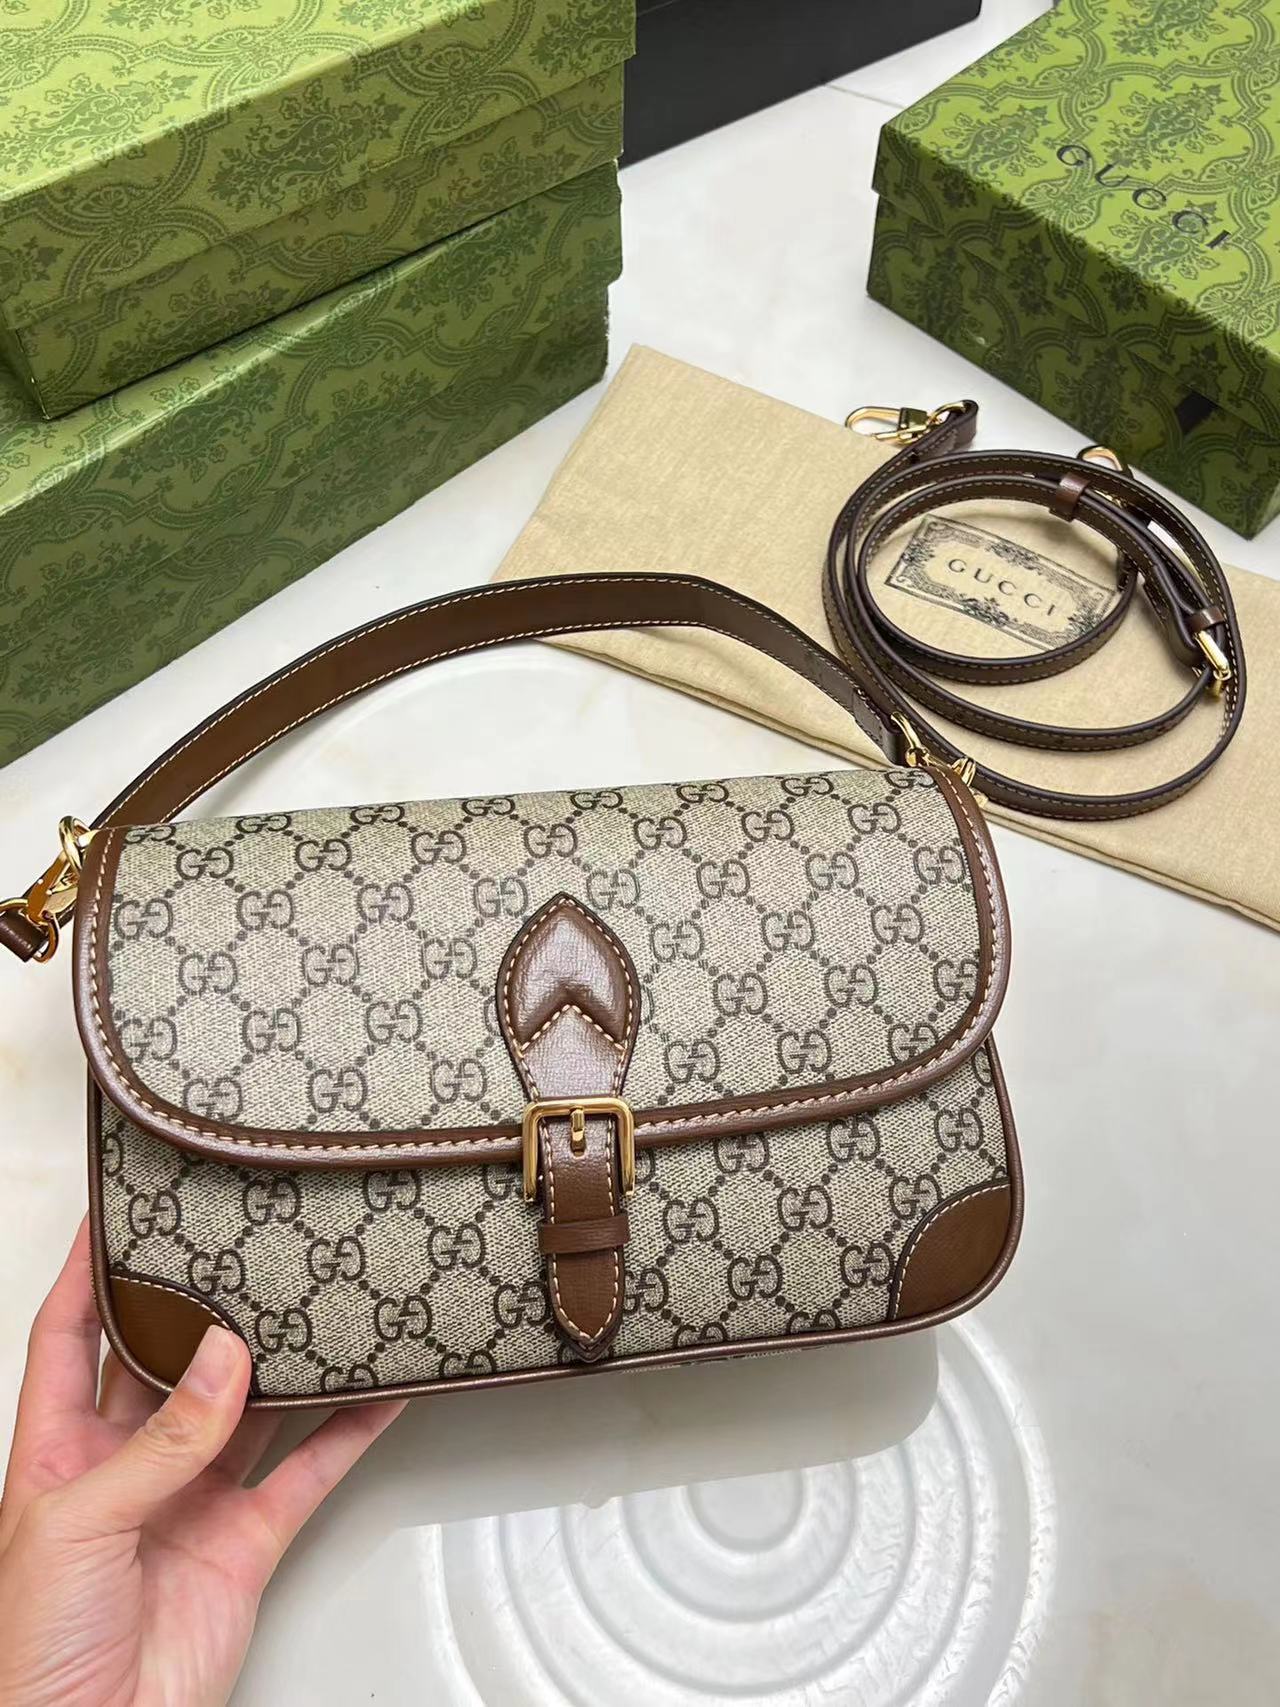 Gucci Soho Leather Flap Shoulder Bag Black Gold Tassel New Authentic:  Handbags: Amazon.com